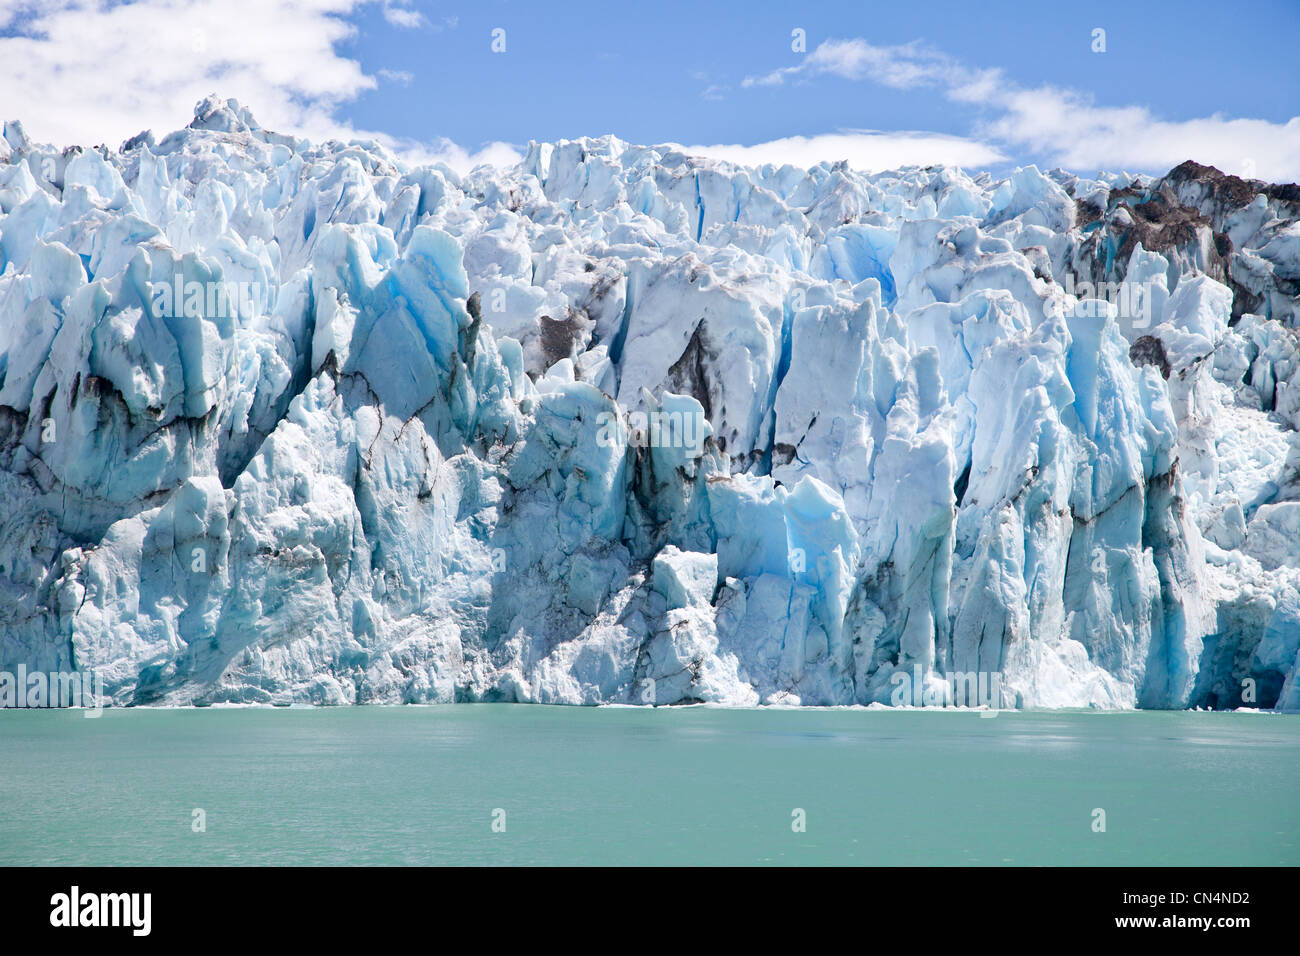 Chile, Patagonia, Aisen region, Capitan Prat province, Villa O'Higgins, O'Higgins lake and glacier Stock Photo